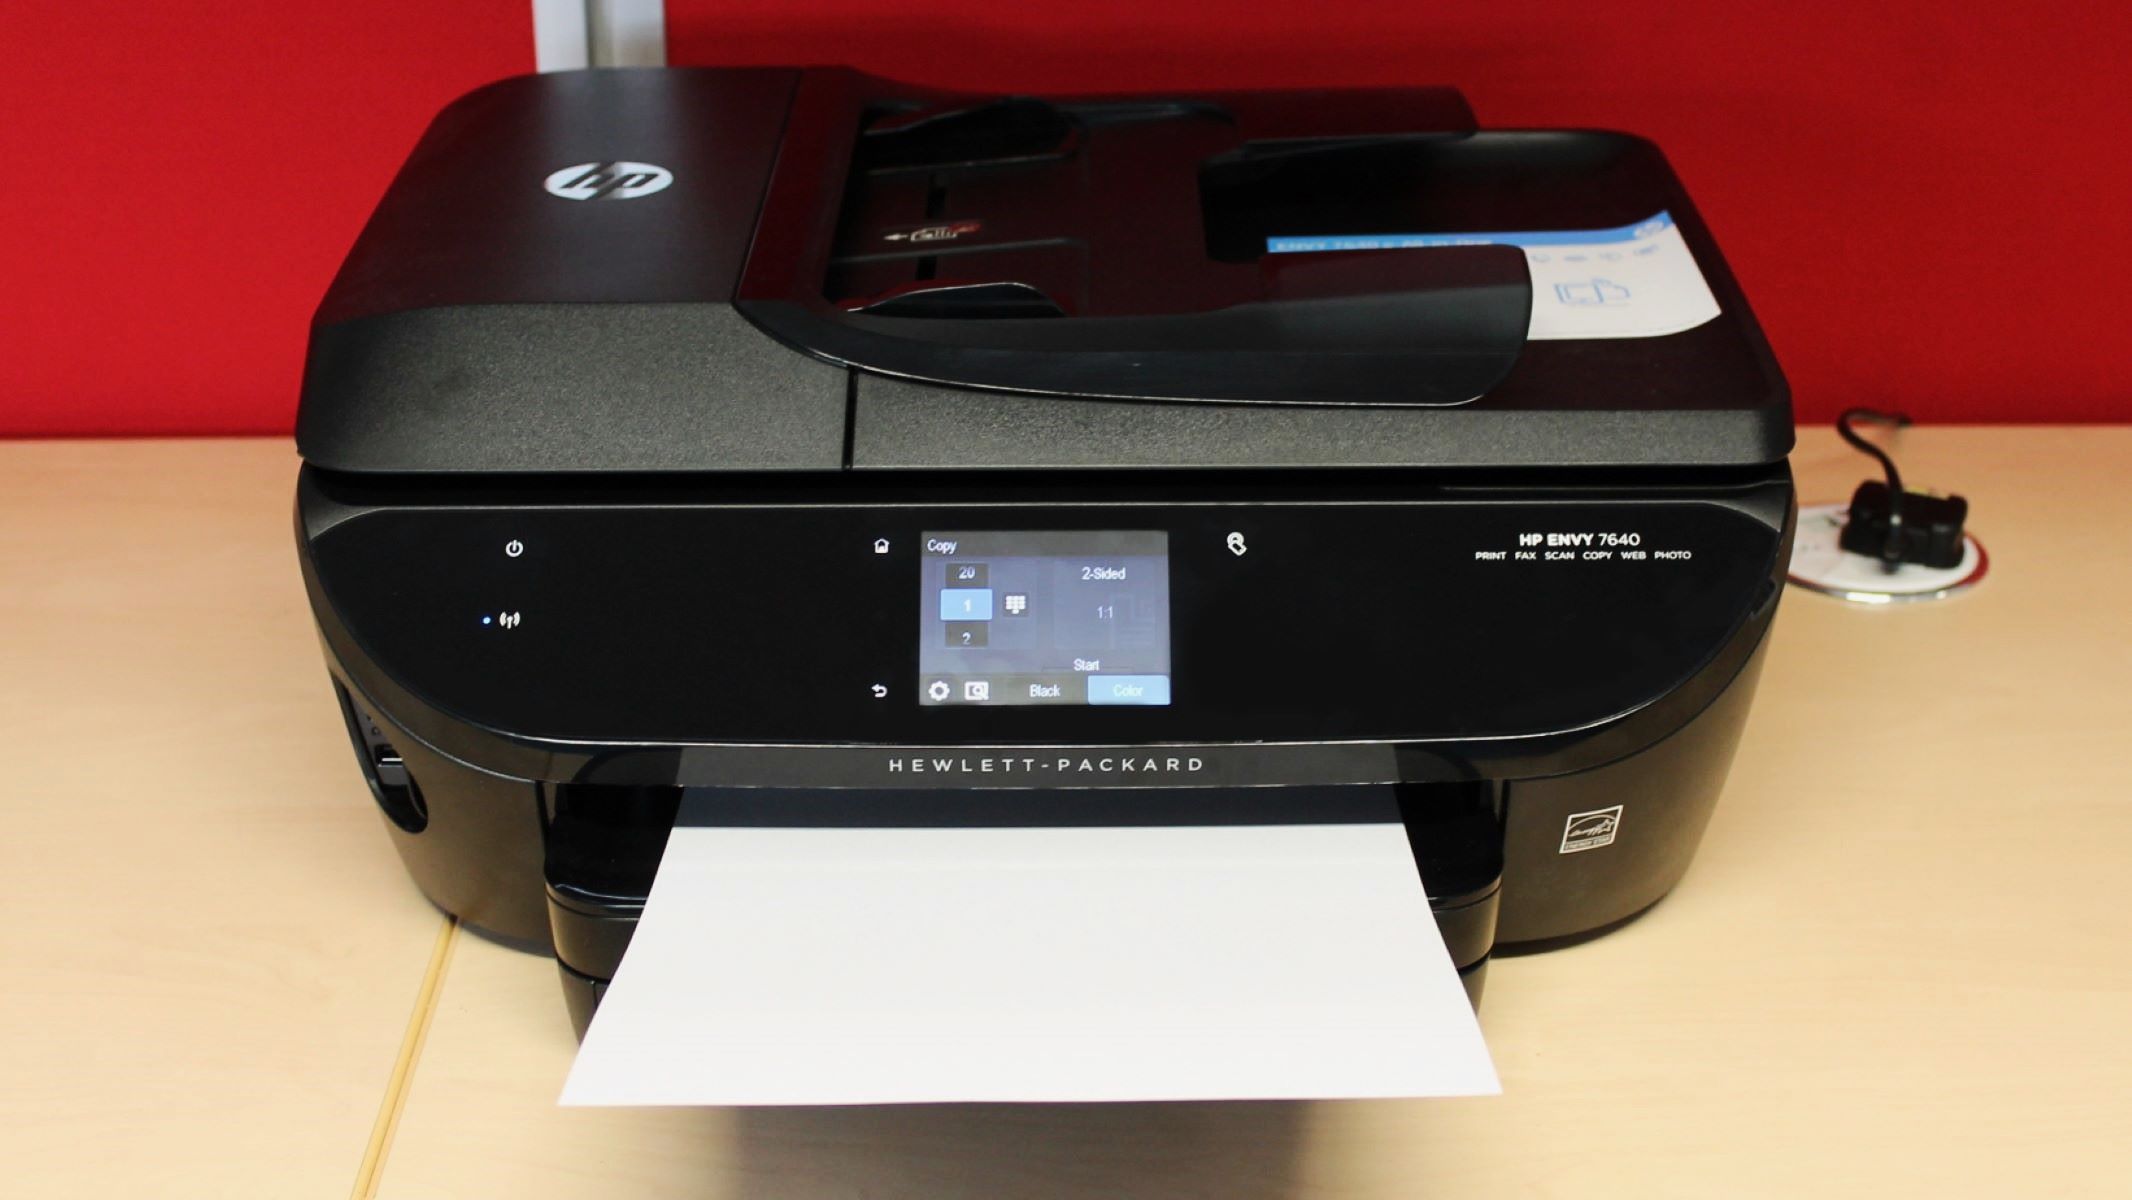 How To Set Up HP Envy 7640 Printer